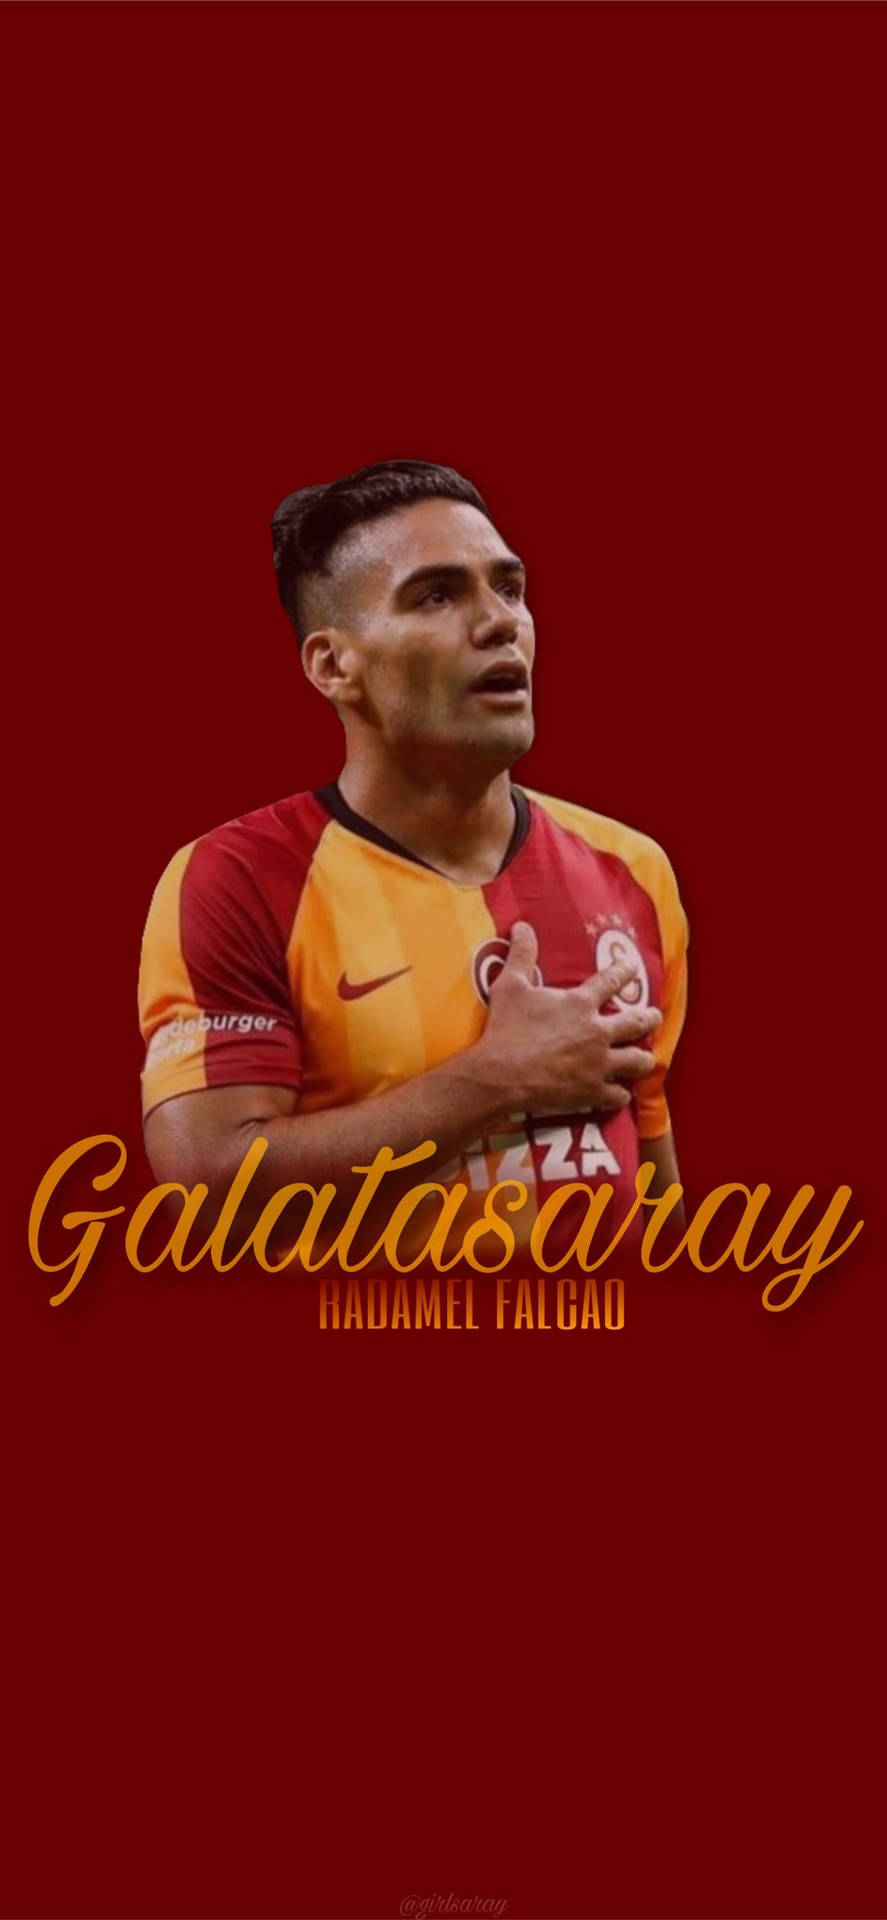 Galatasaray 1284 X 2778 Wallpaper